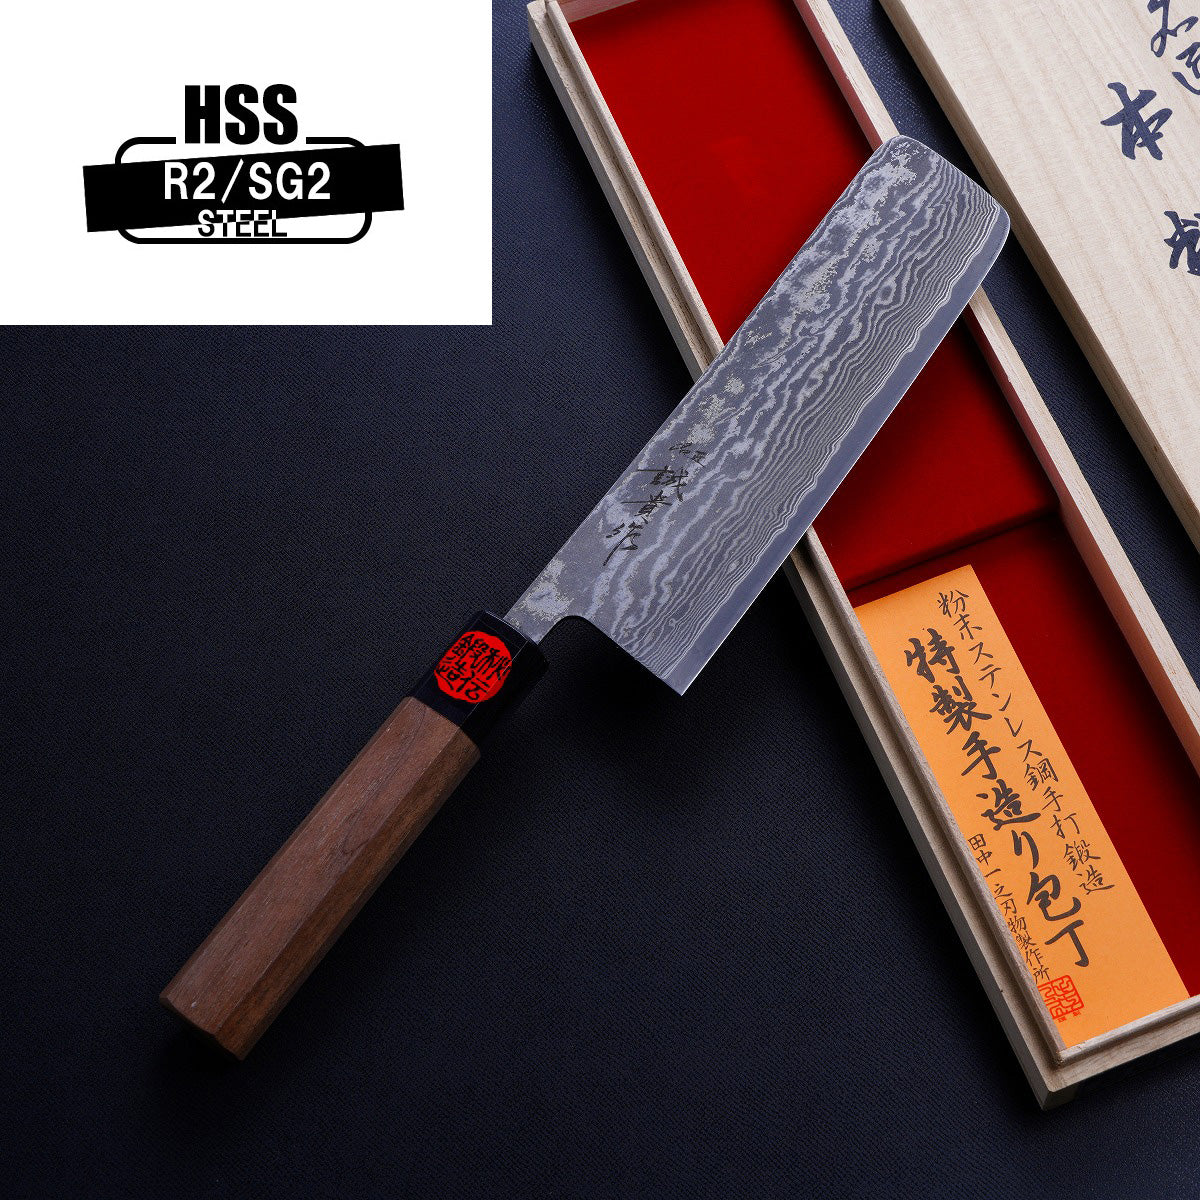 Nakano Nakiri Handmade Knife, Vegetables Knife, Japanese Knife